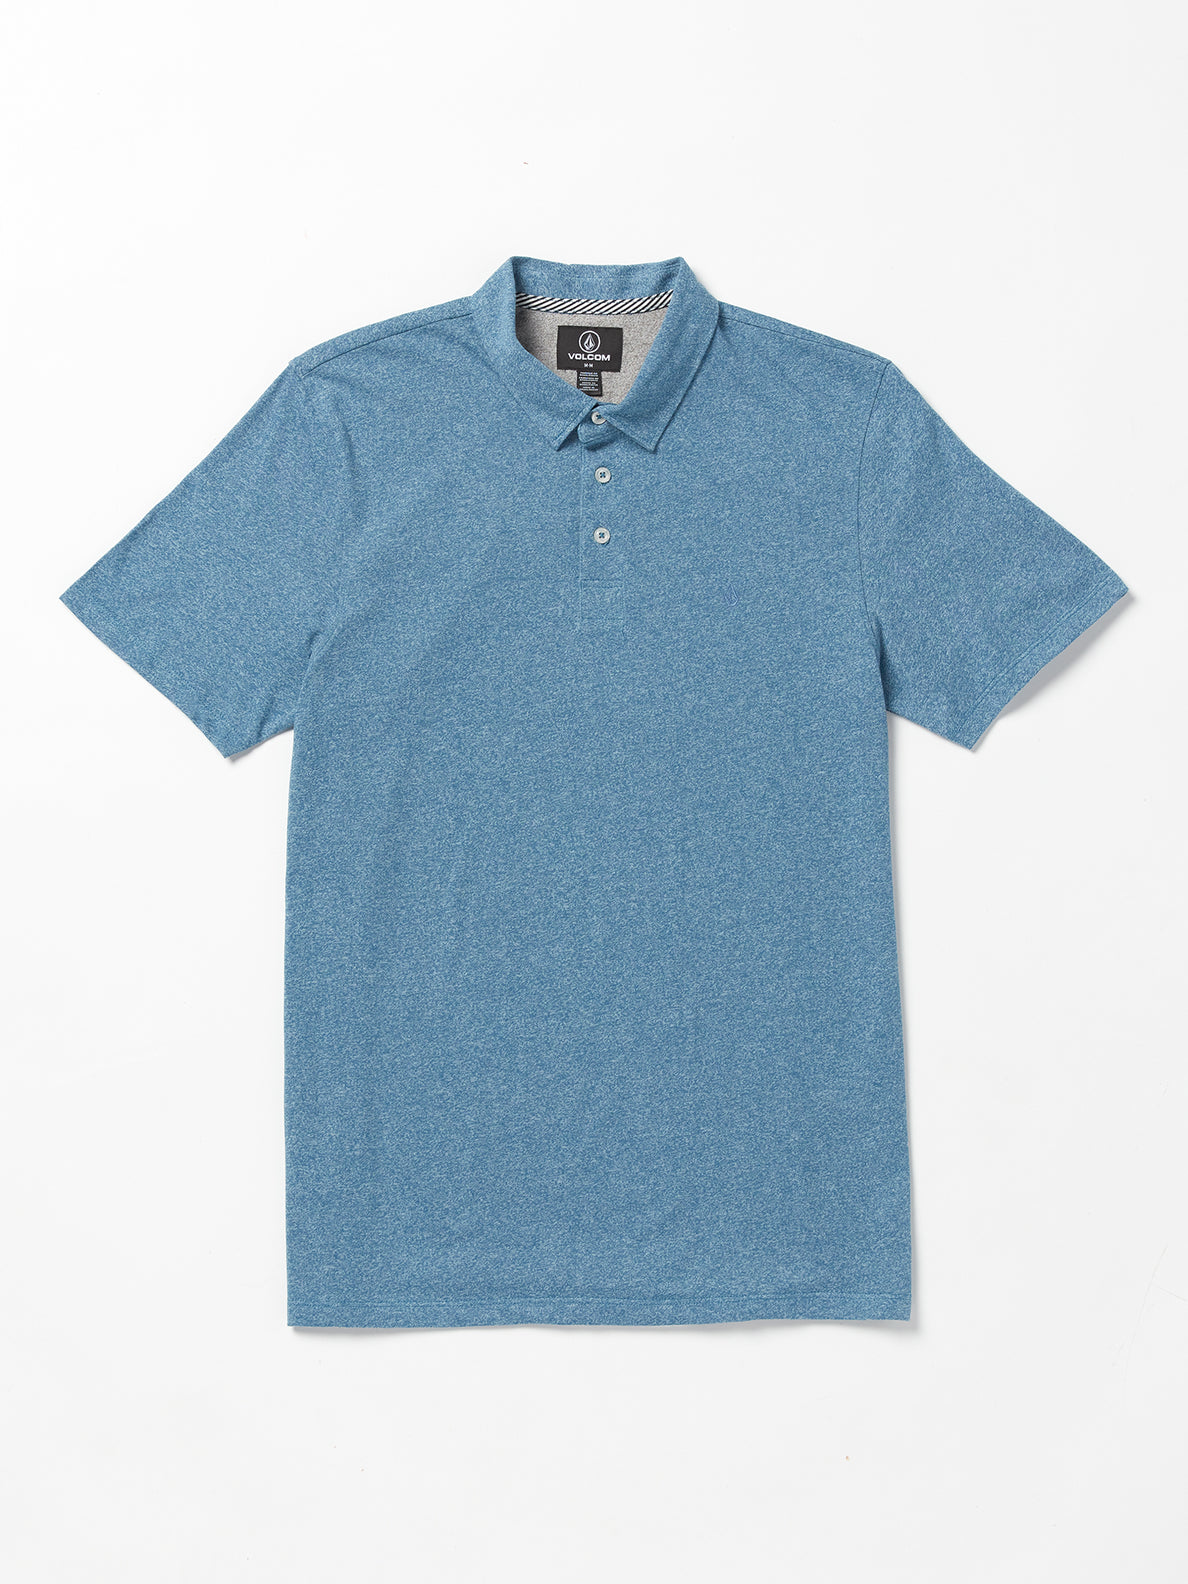 Wowzer Polo Short Sleeve Shirt - Indigo Ridge (A0112303_IRG) [F]